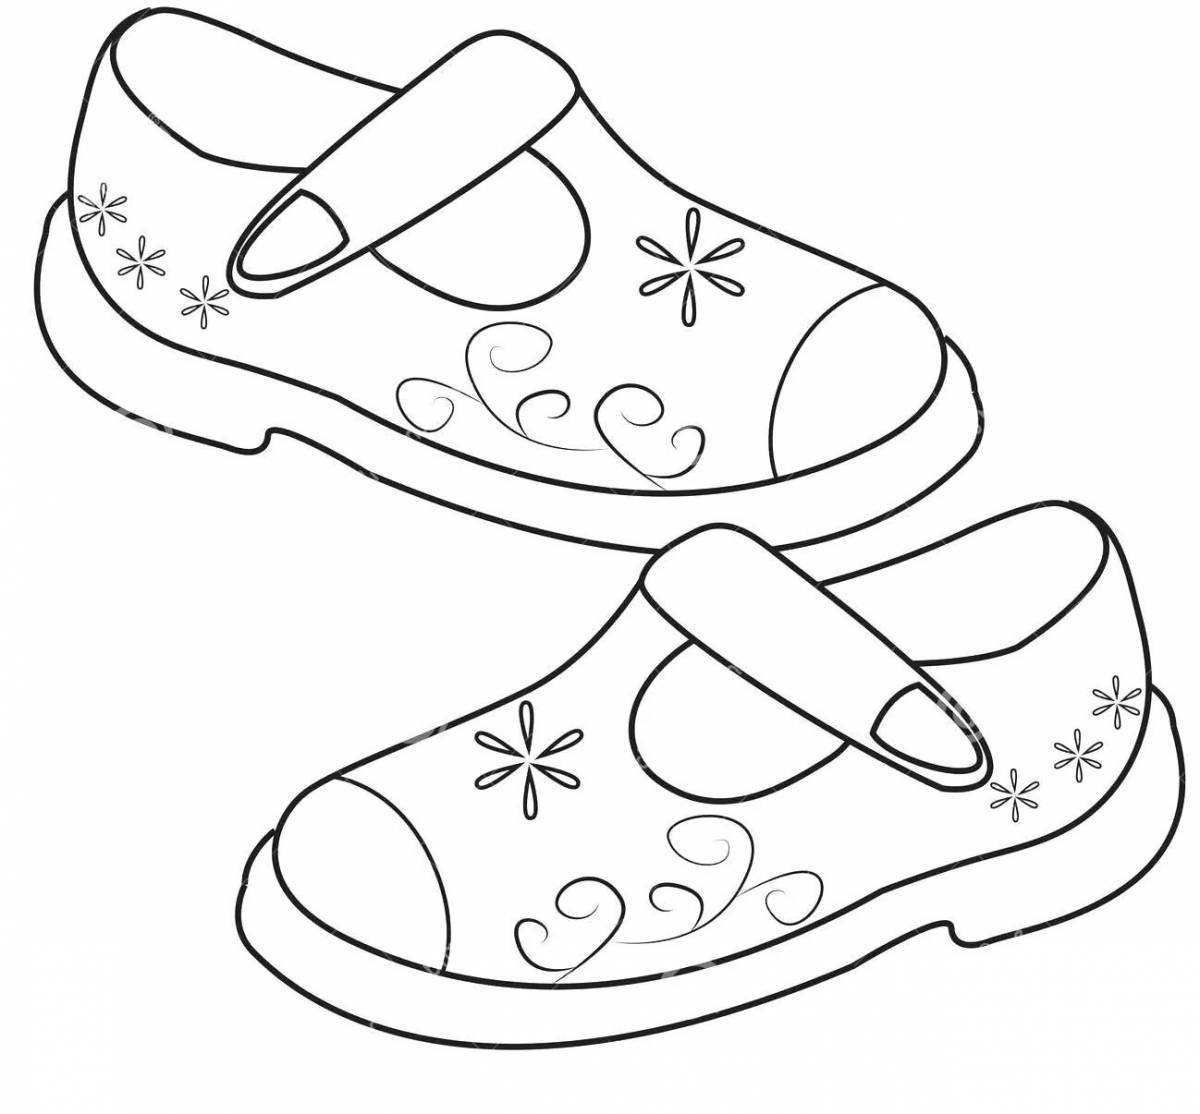 Joyful shoes coloring book for preschoolers